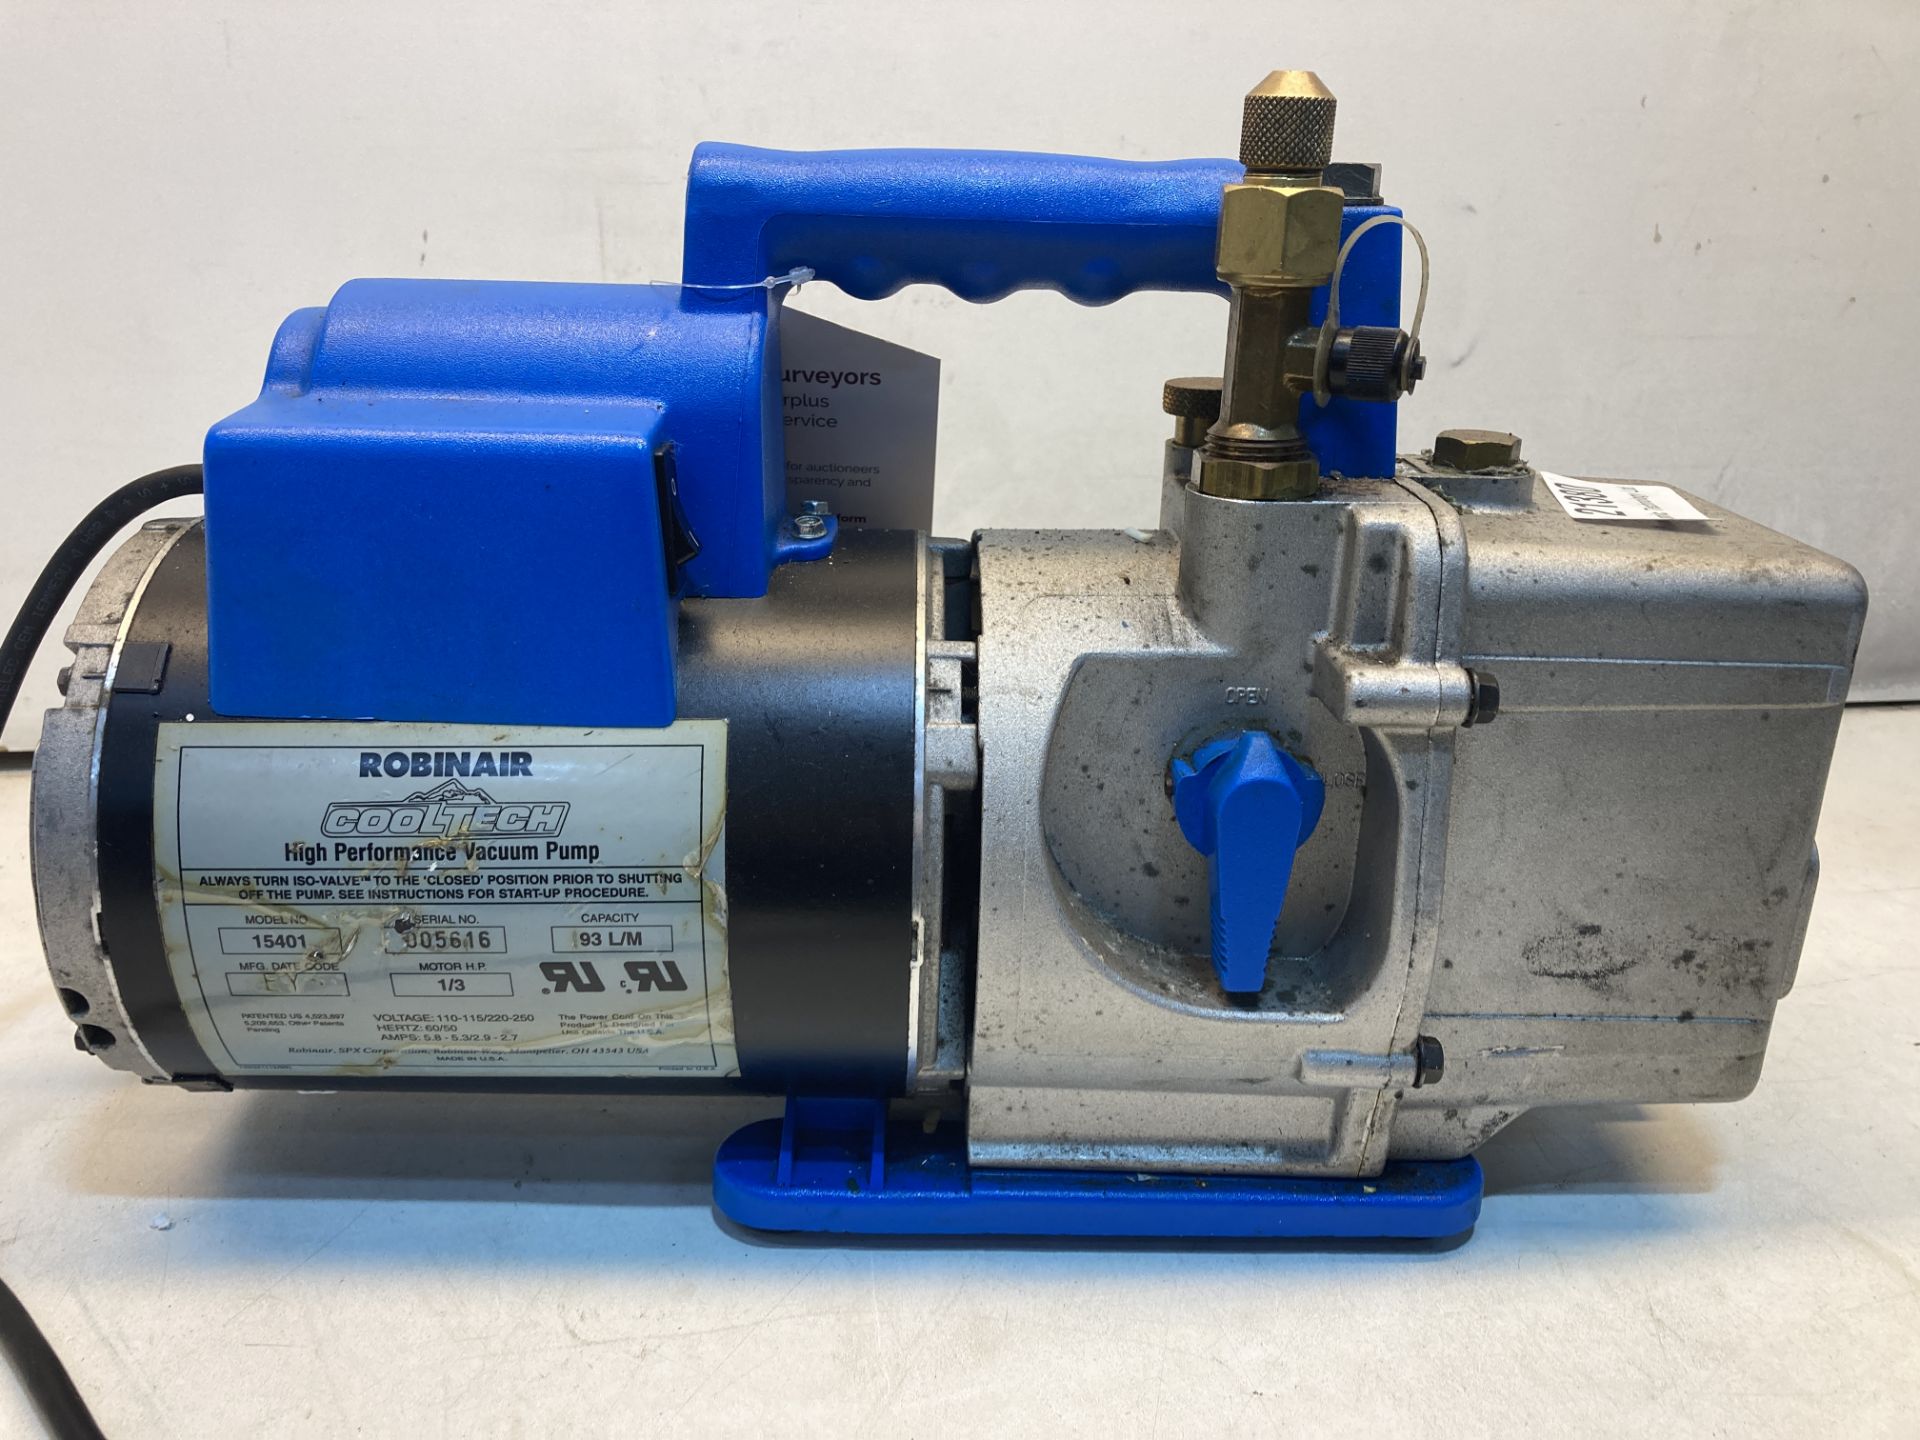 Robinair Cooltech High Performance Vacuum Pump - Image 2 of 5